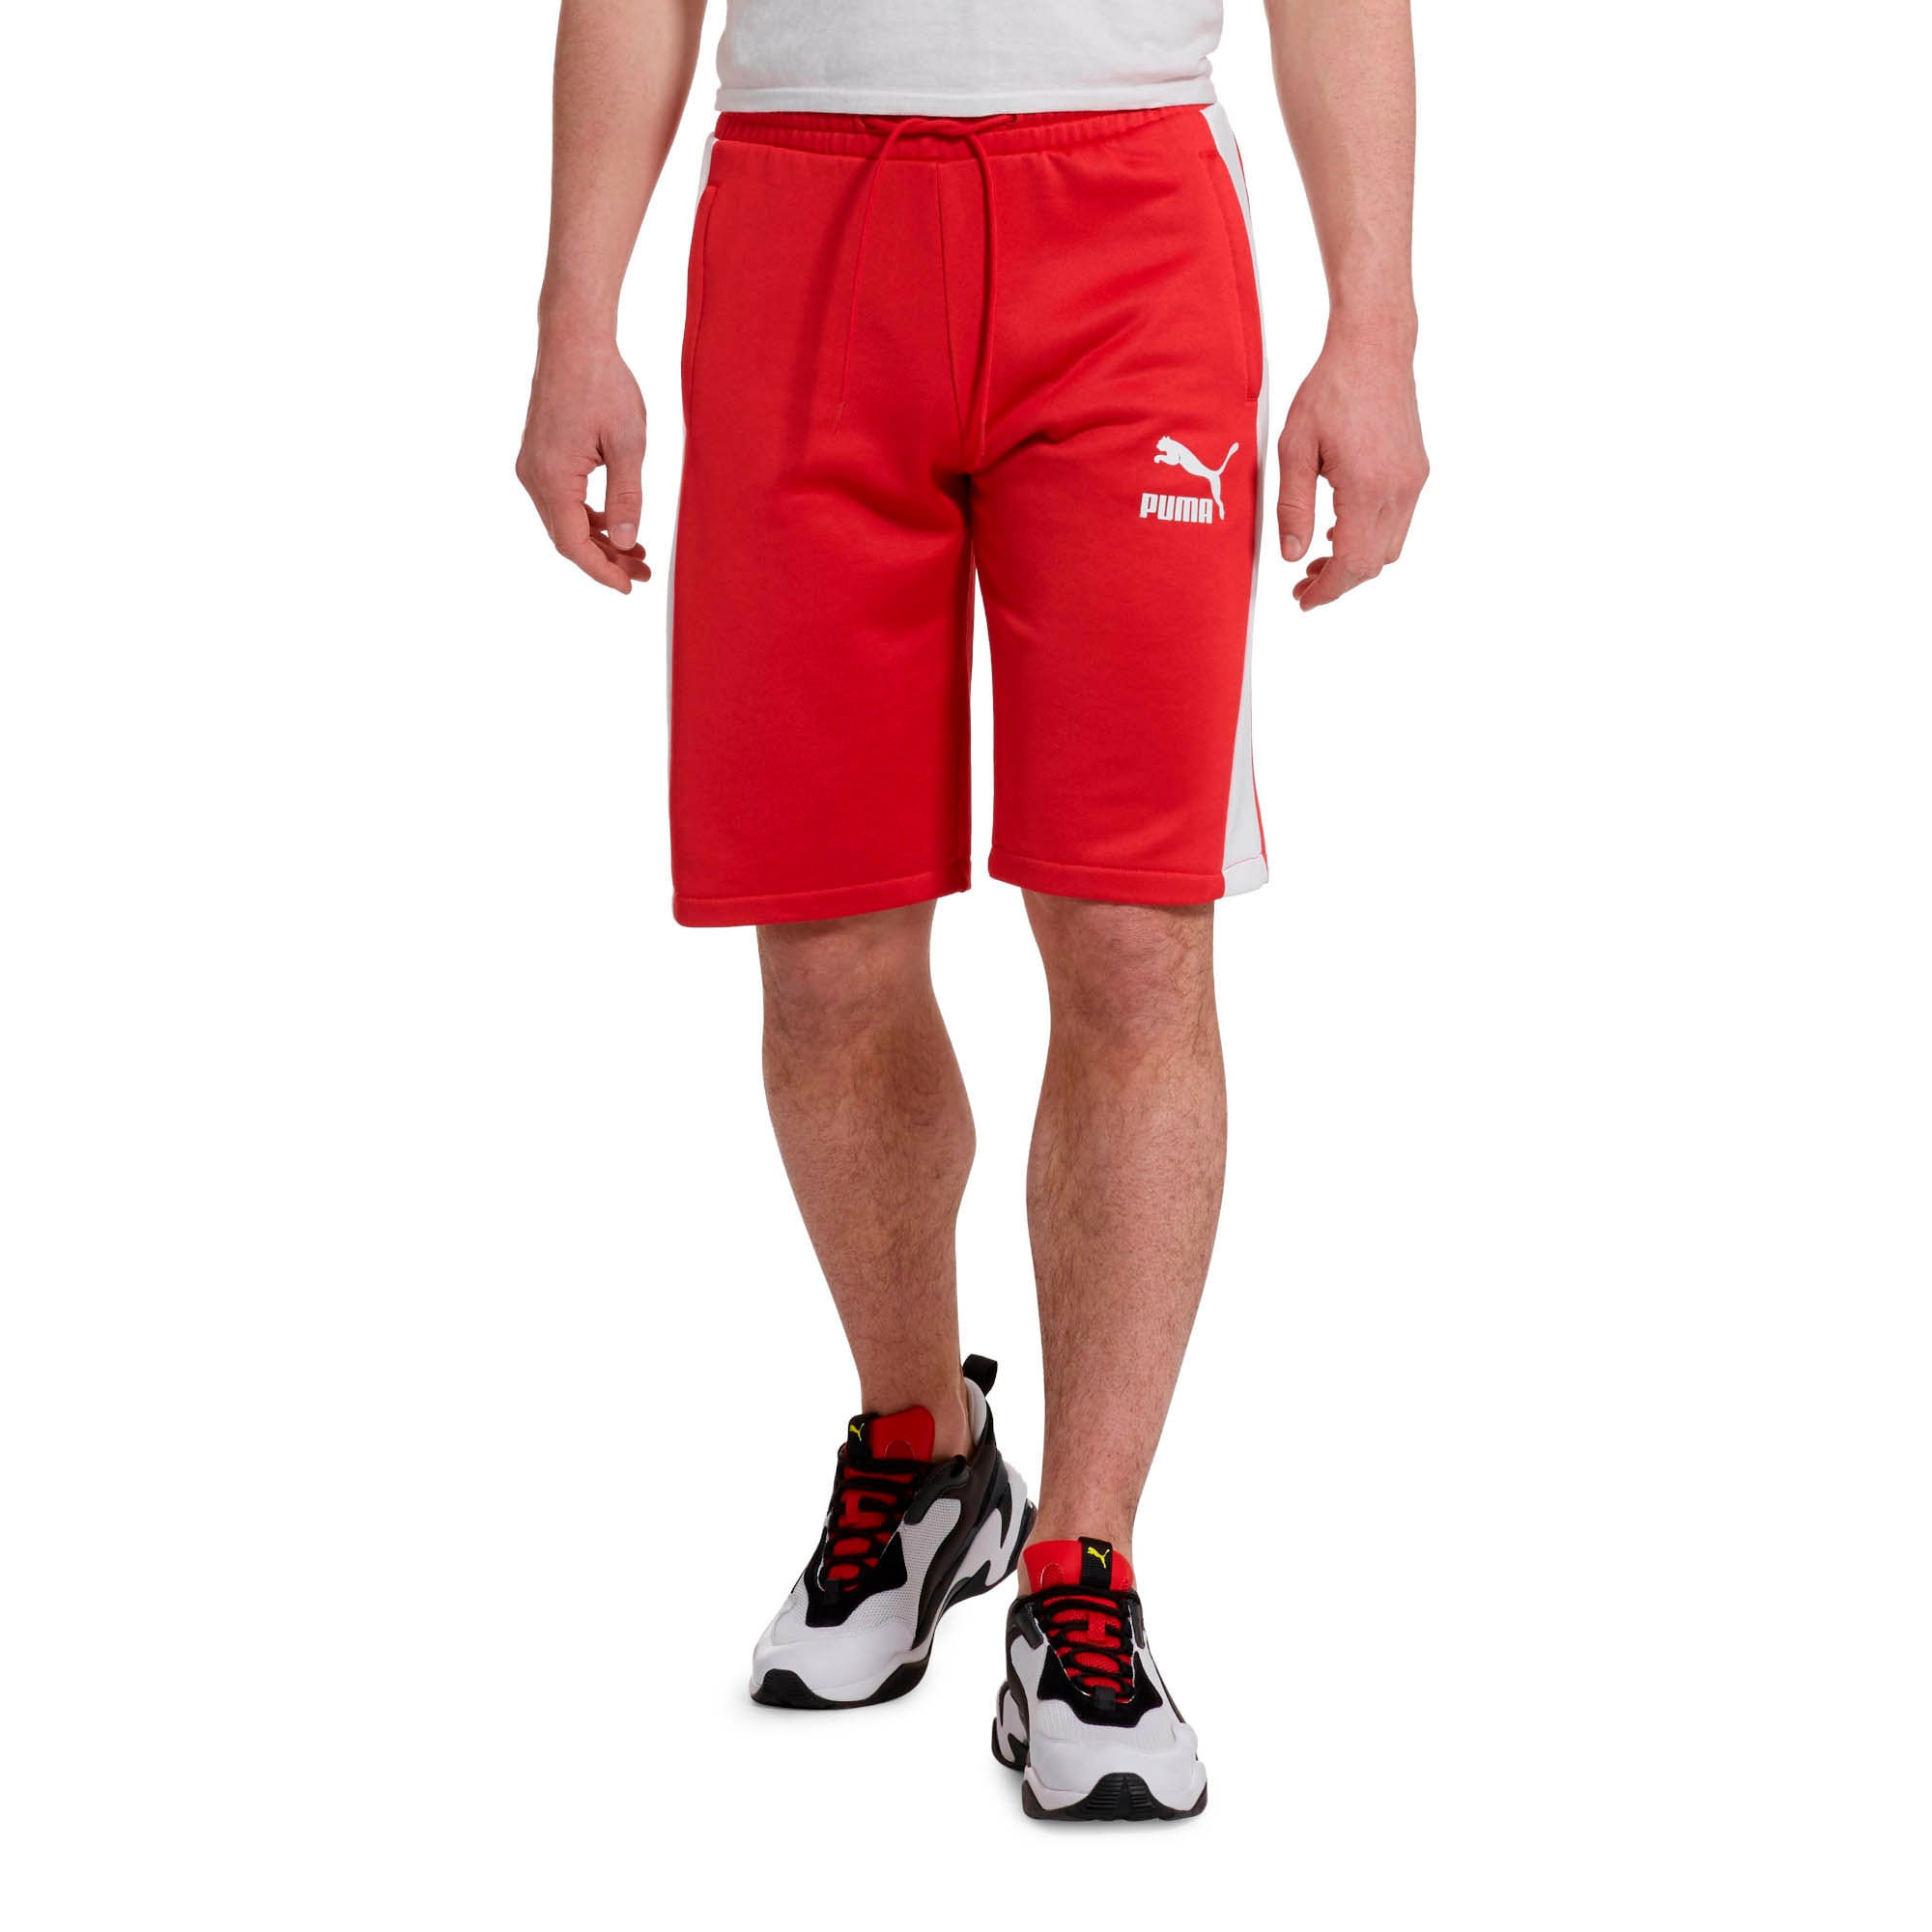 puma lifestyle shorts - 53% OFF 